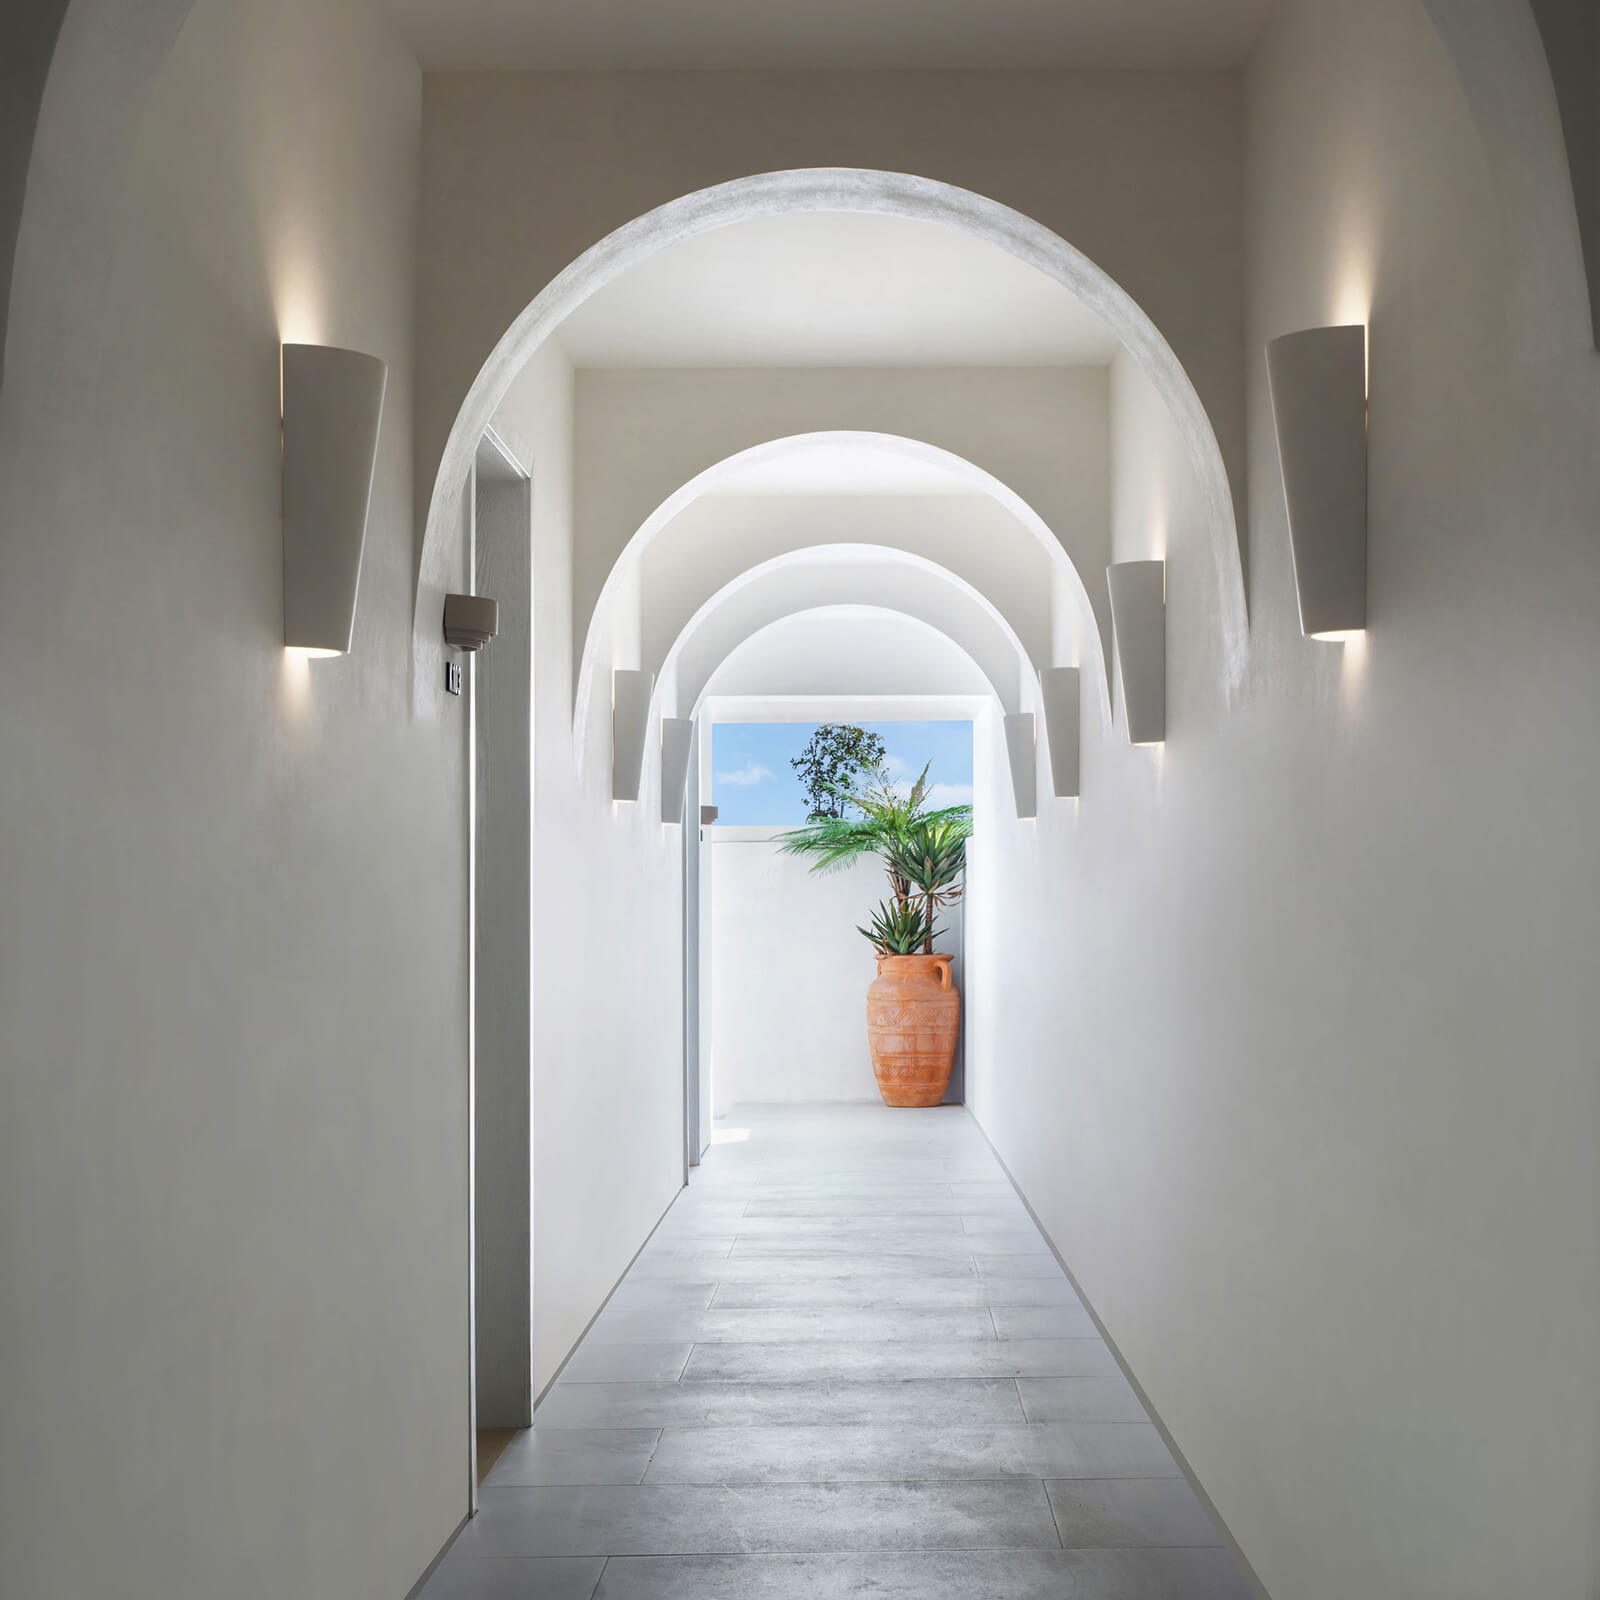 luxury hotel design - entrance by studio GS